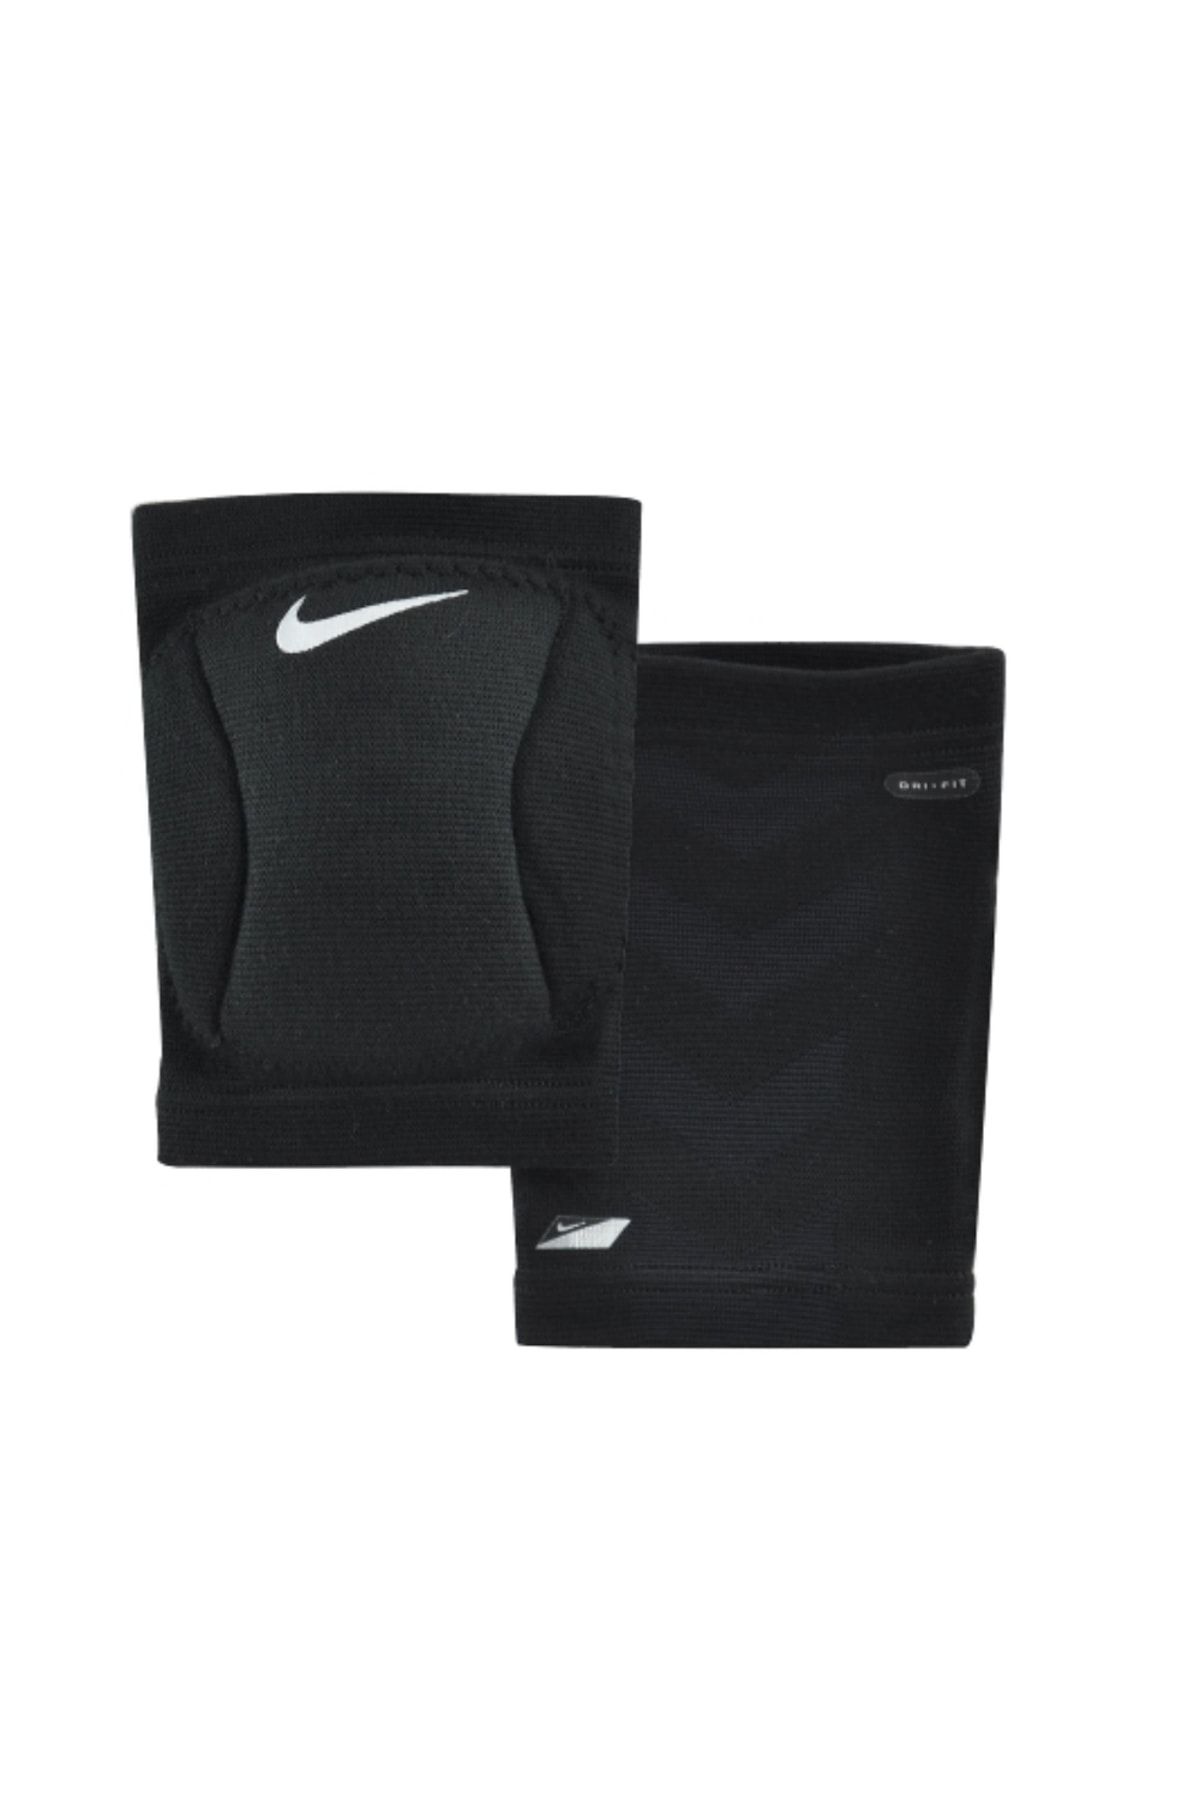 Nike Streak Volleyball Knee Pad Voleybol Dizliği M/l 140/160cm